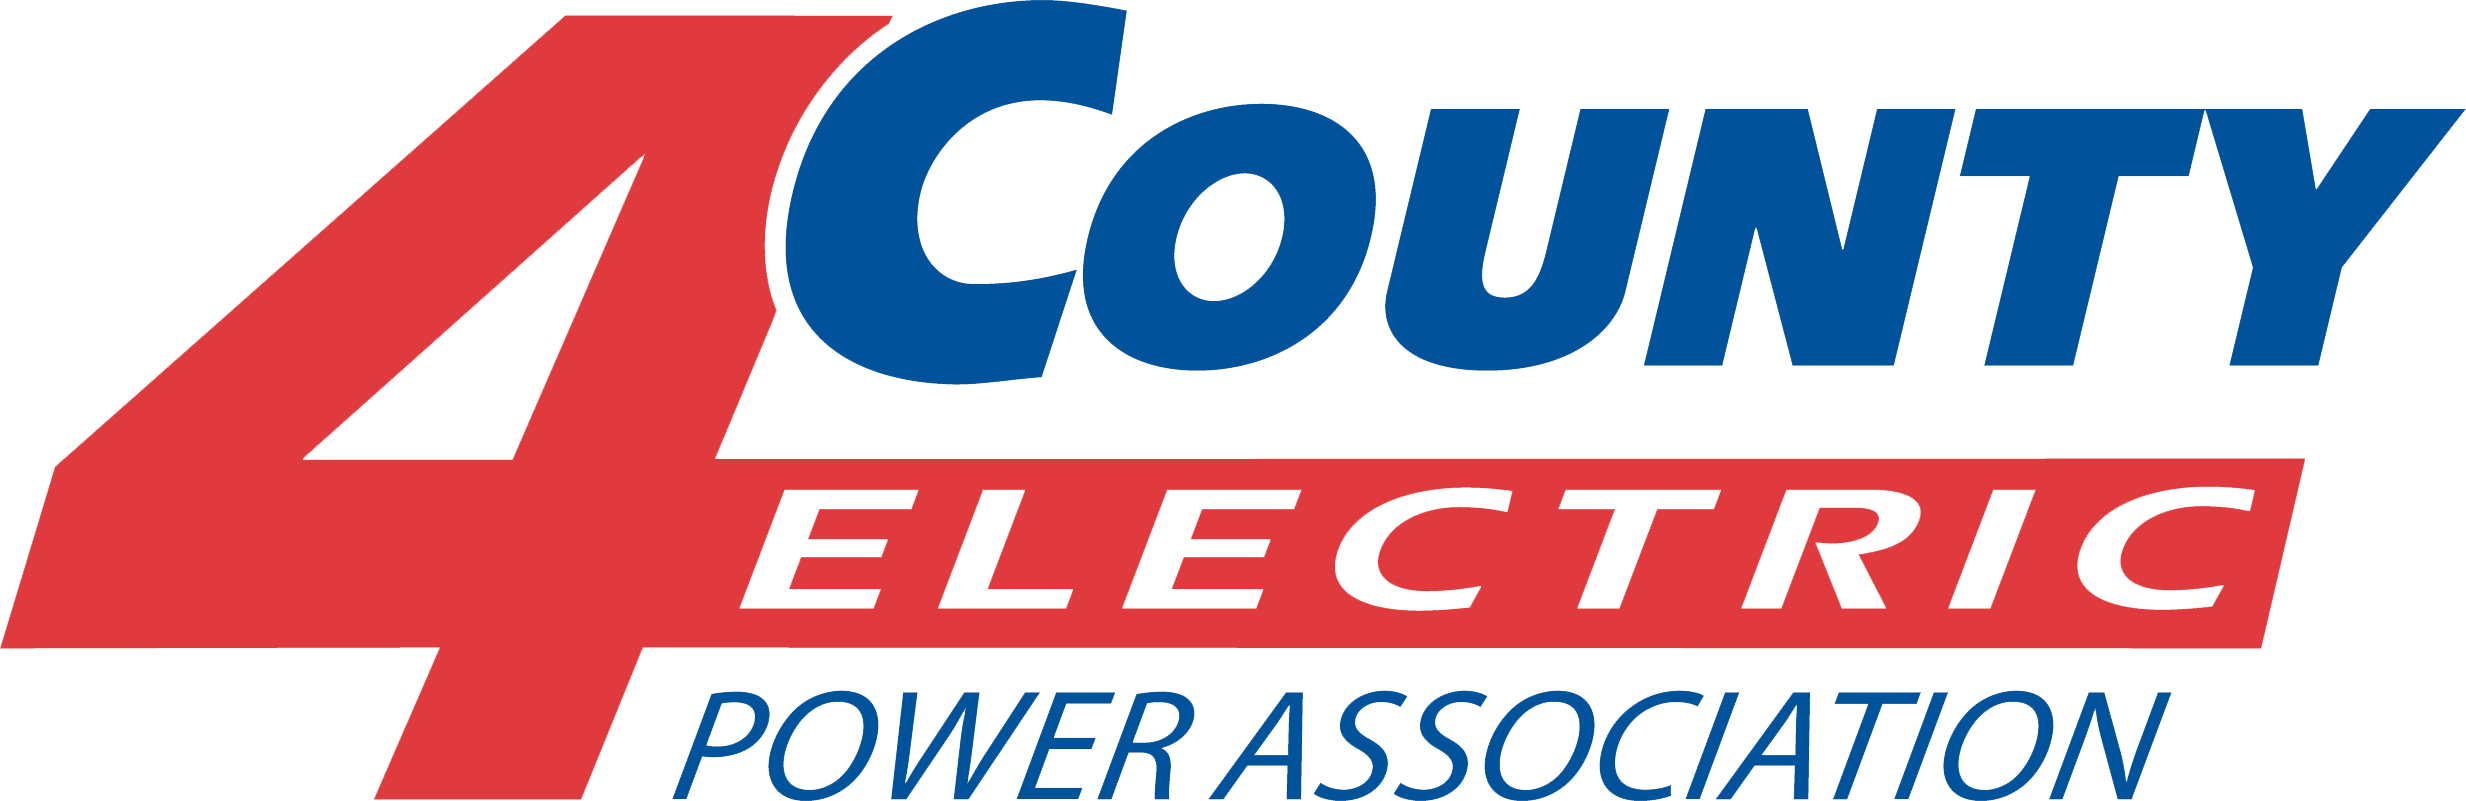 4county logo